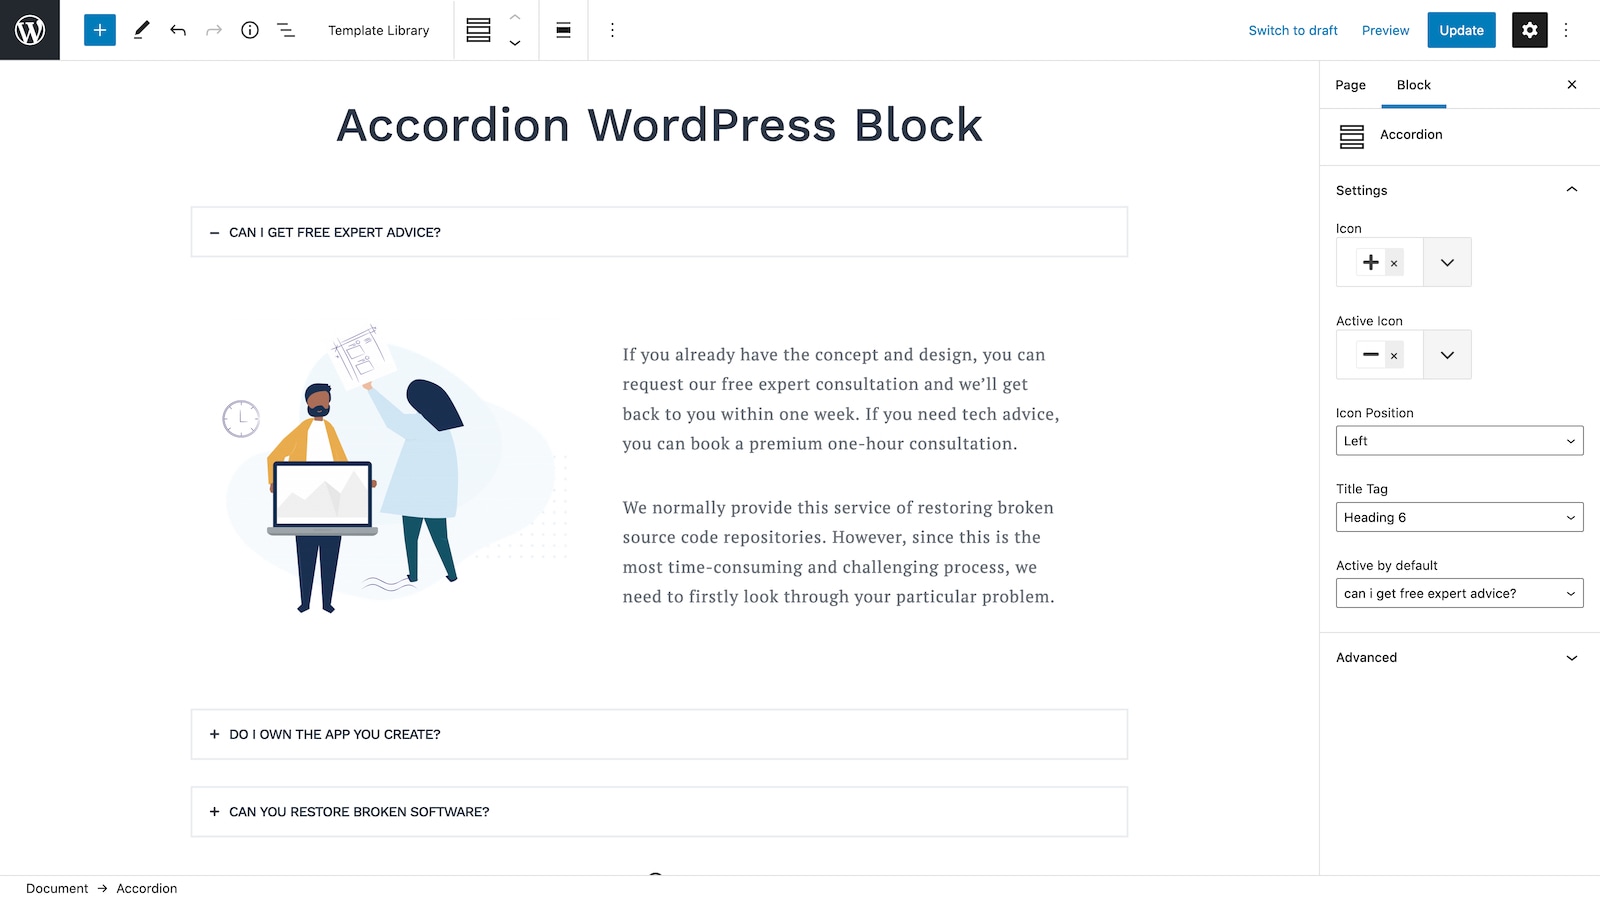 Accordion WordPress Block.